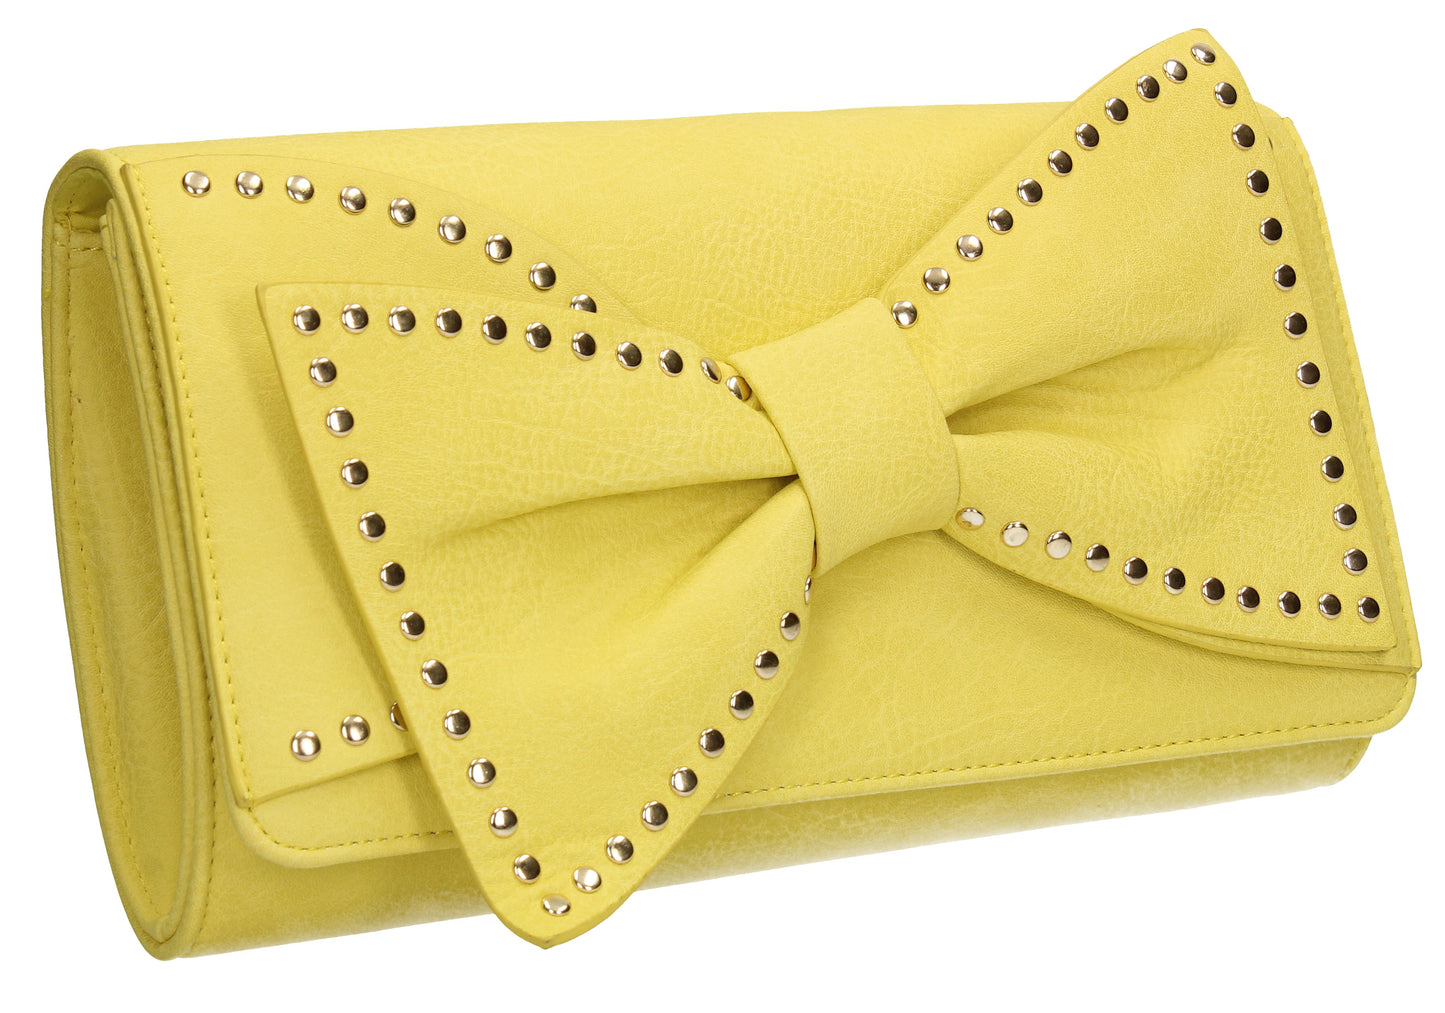 SWANKYSWANS Kelly Bow Clutch Bag Yellow Cute Cheap Clutch Bag For Weddings School and Work